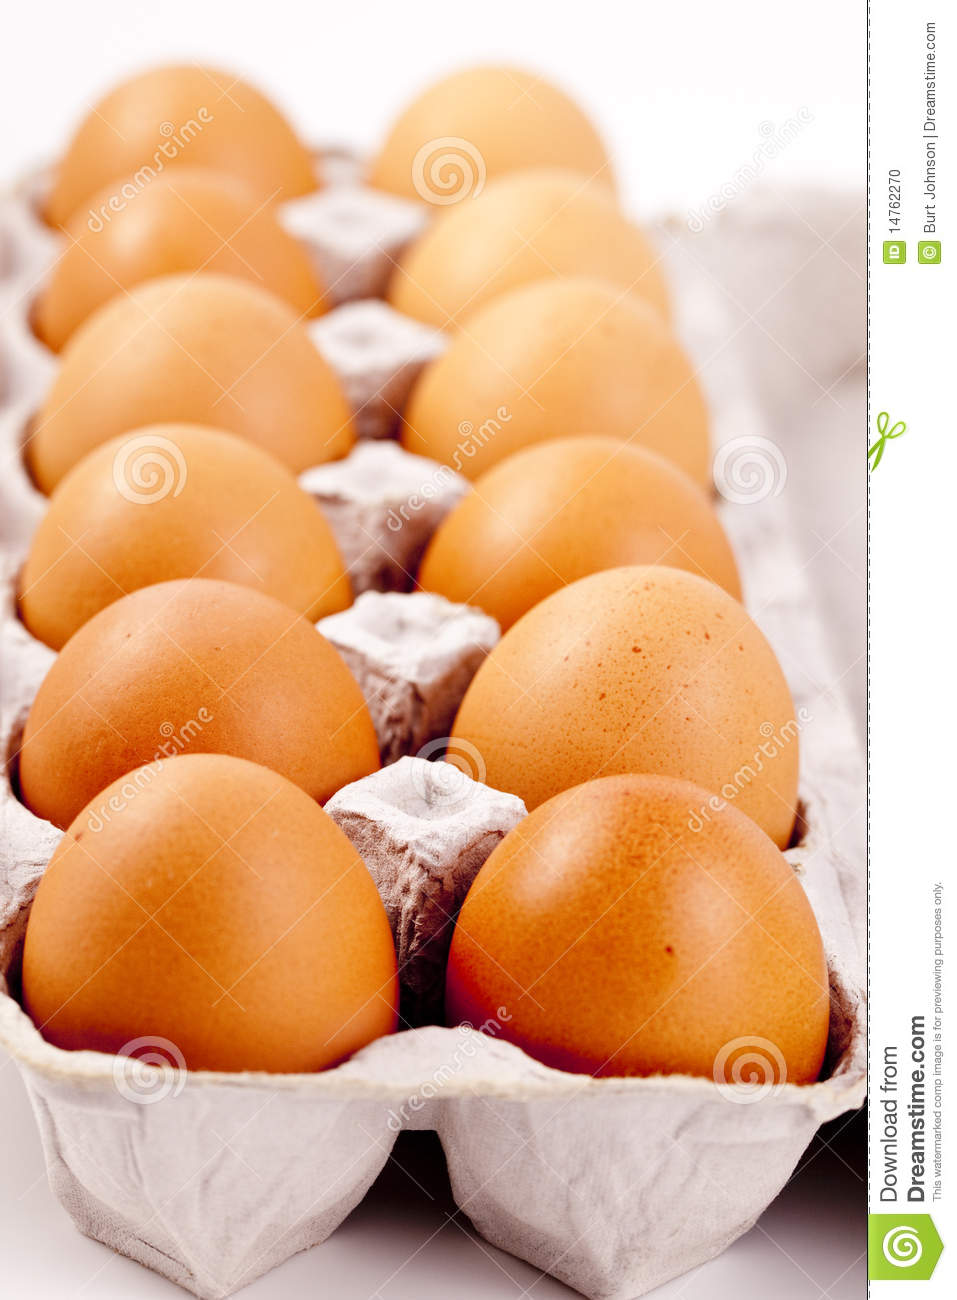 Stock Photo  Carton Of Brown Eggs  Image  14762270